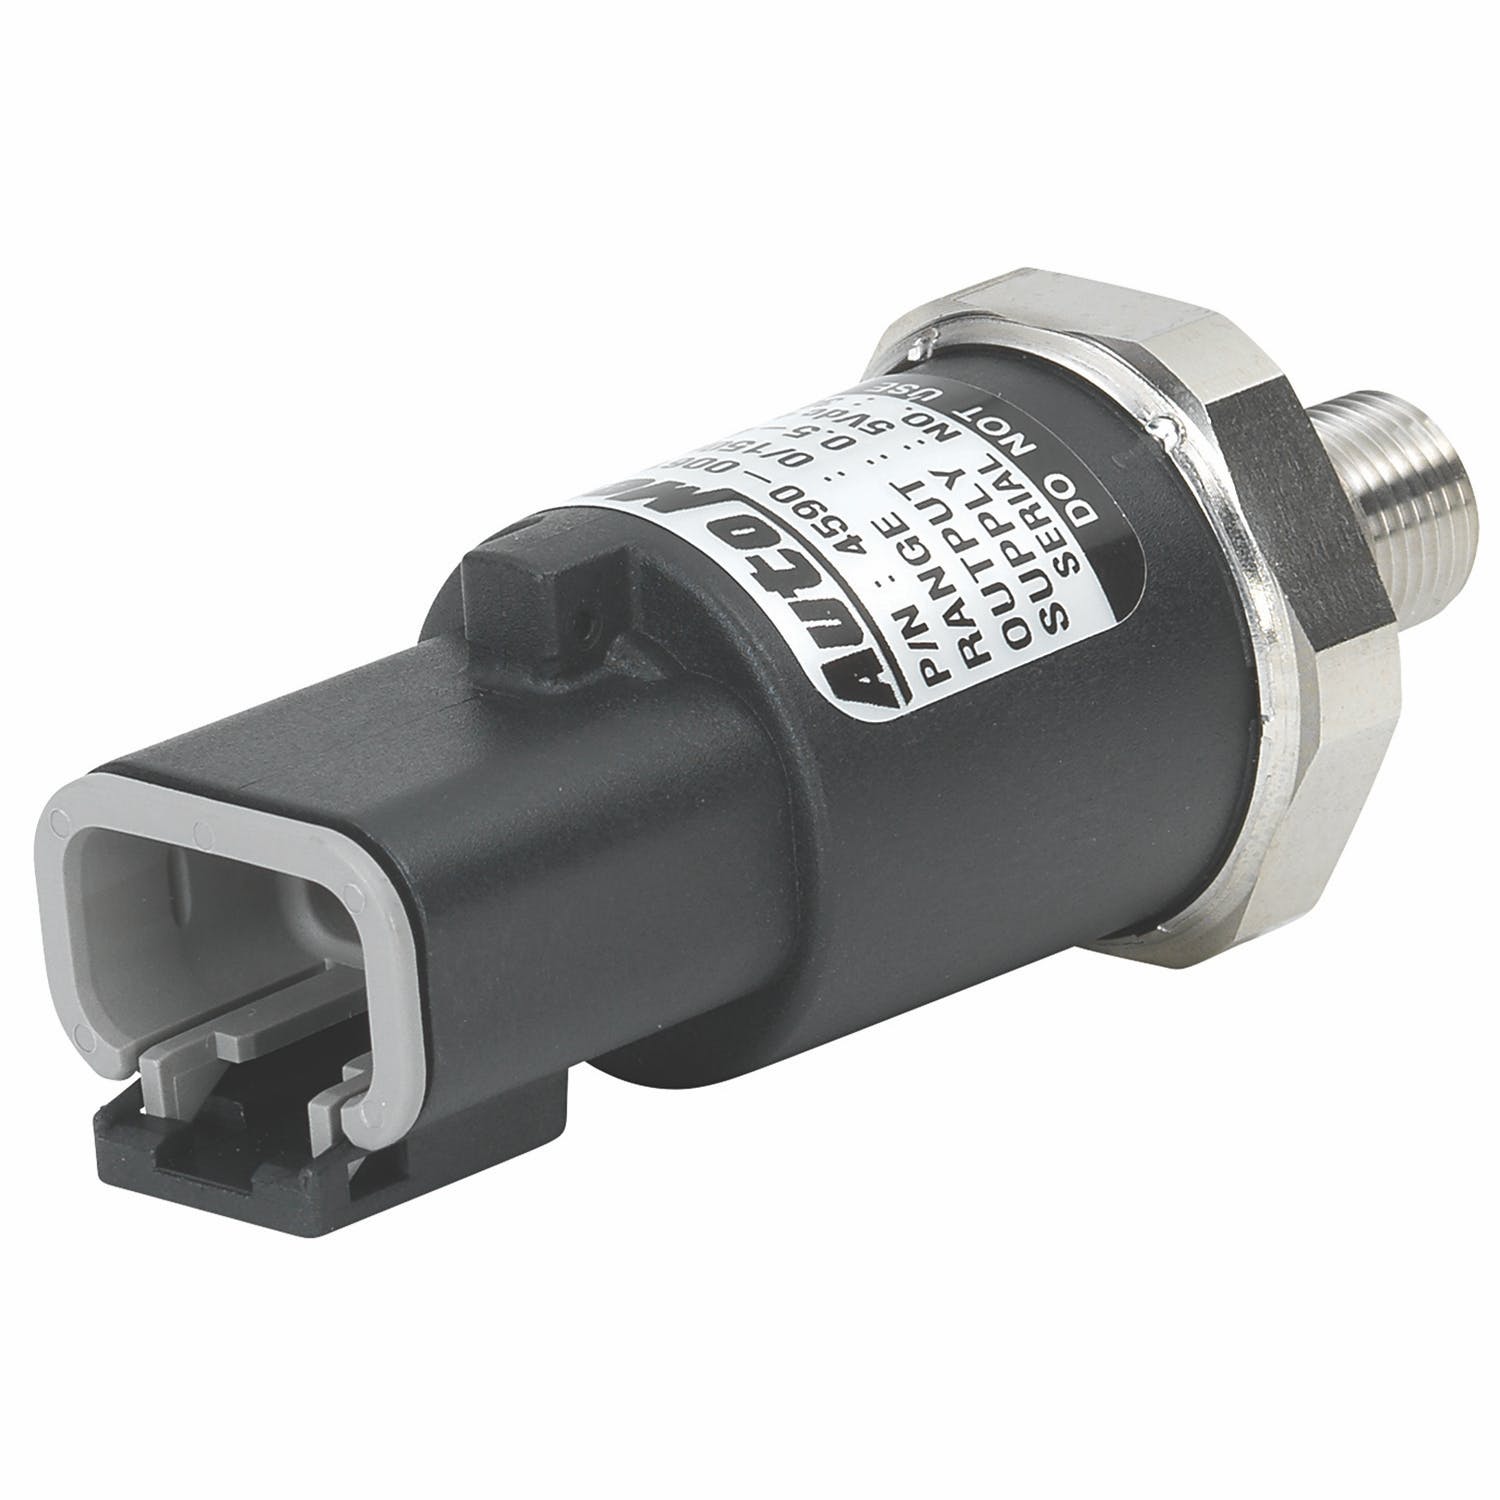 AutoMeter Products P13153 Spek Pro Pressure Sensor 0-150psi